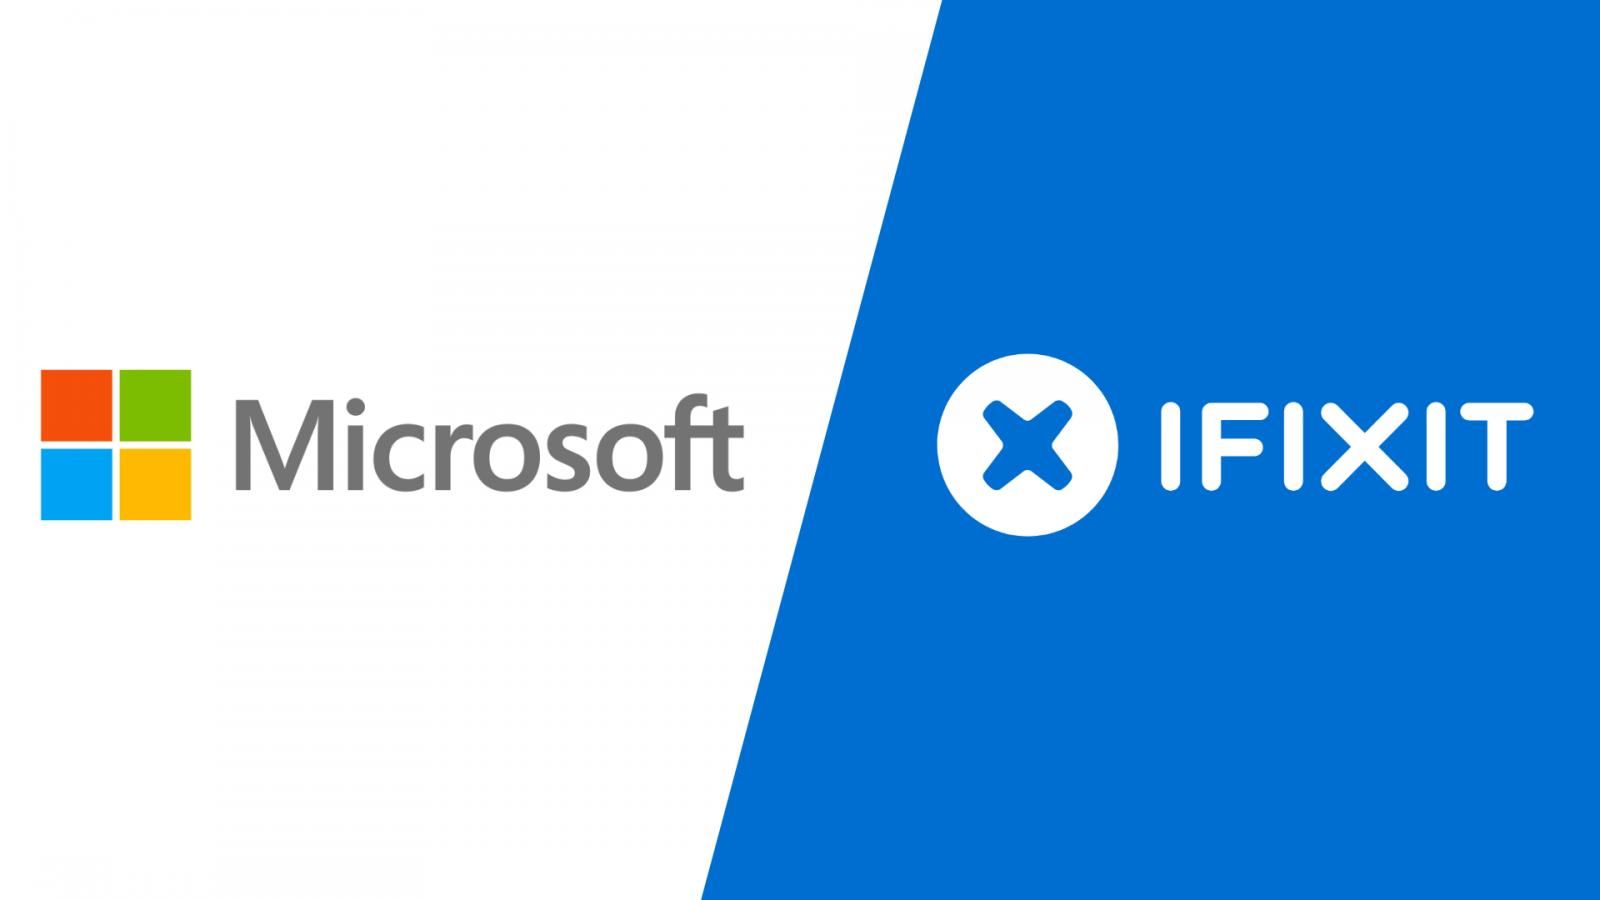 Microsoft Surface and iFixit partnership